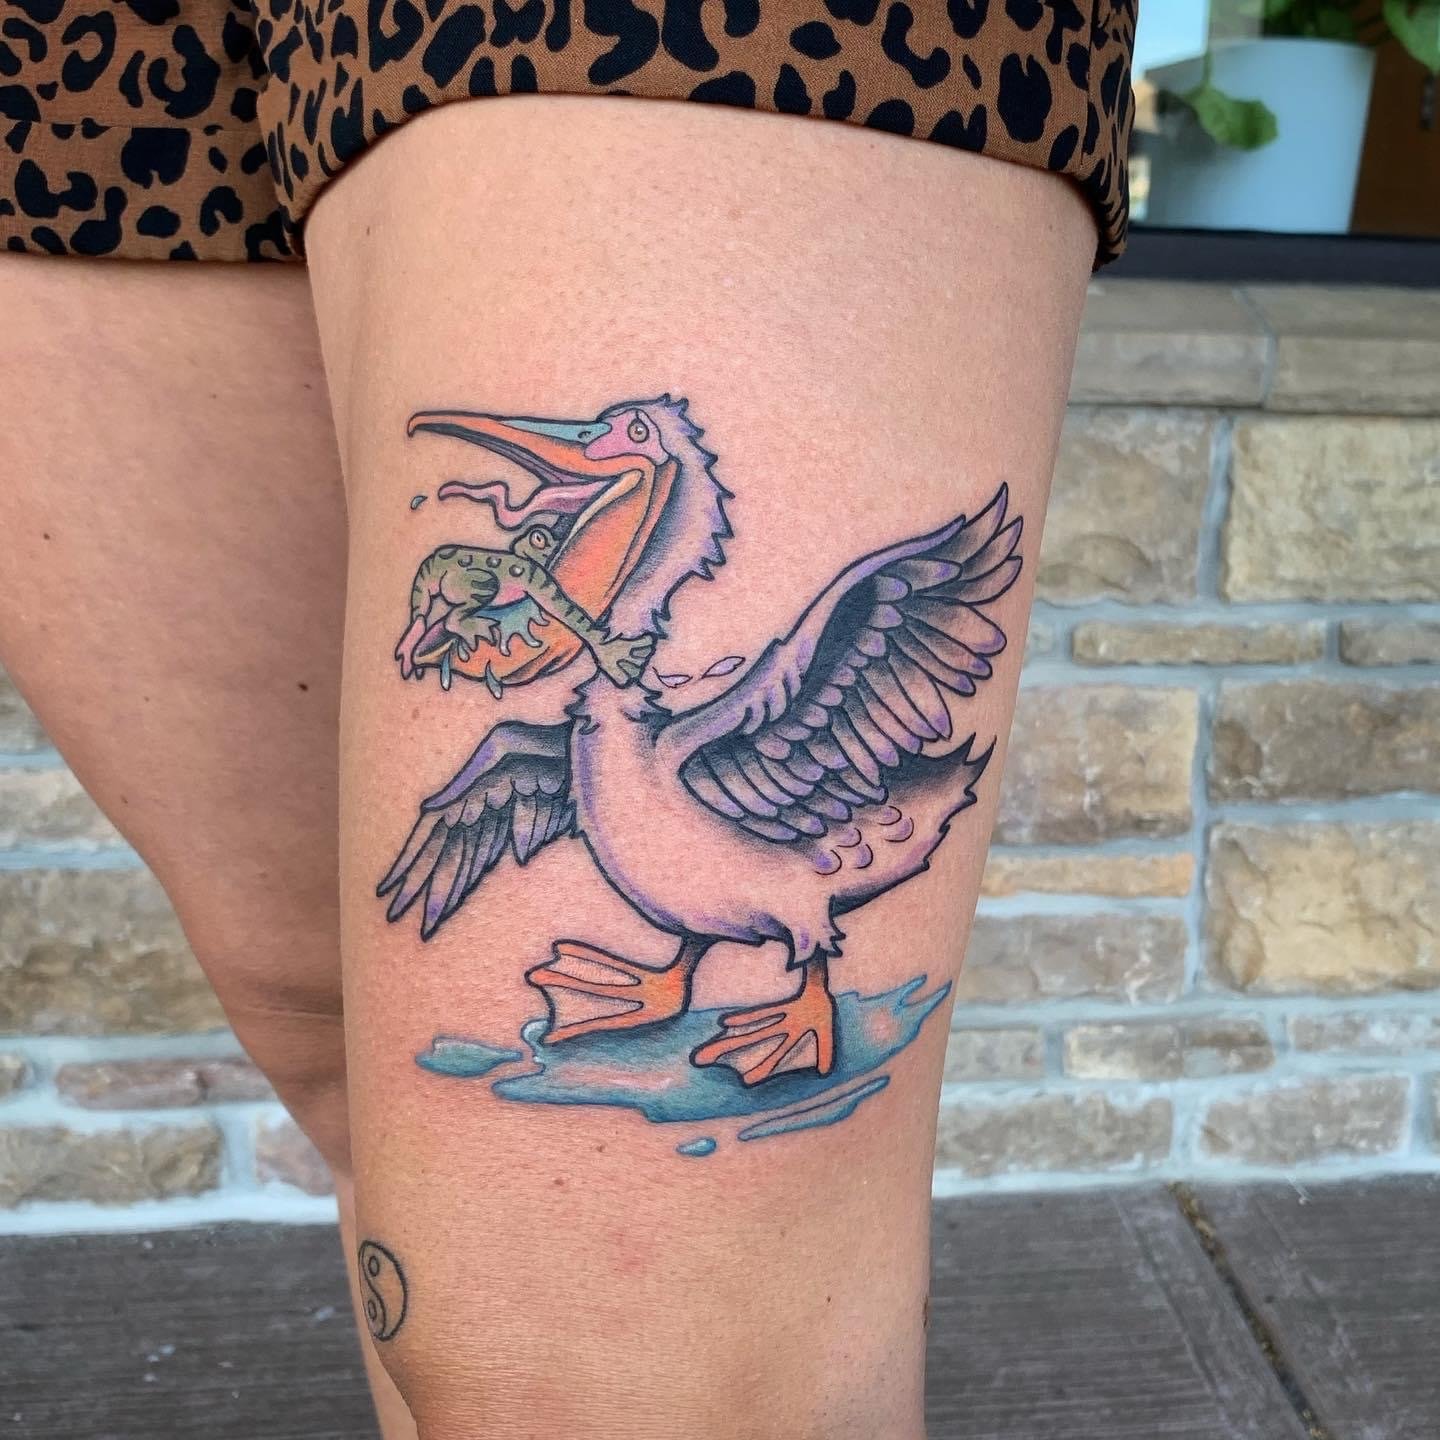 Caitlin McKay  Tattoo Artist and Illustrator in Chicago IL